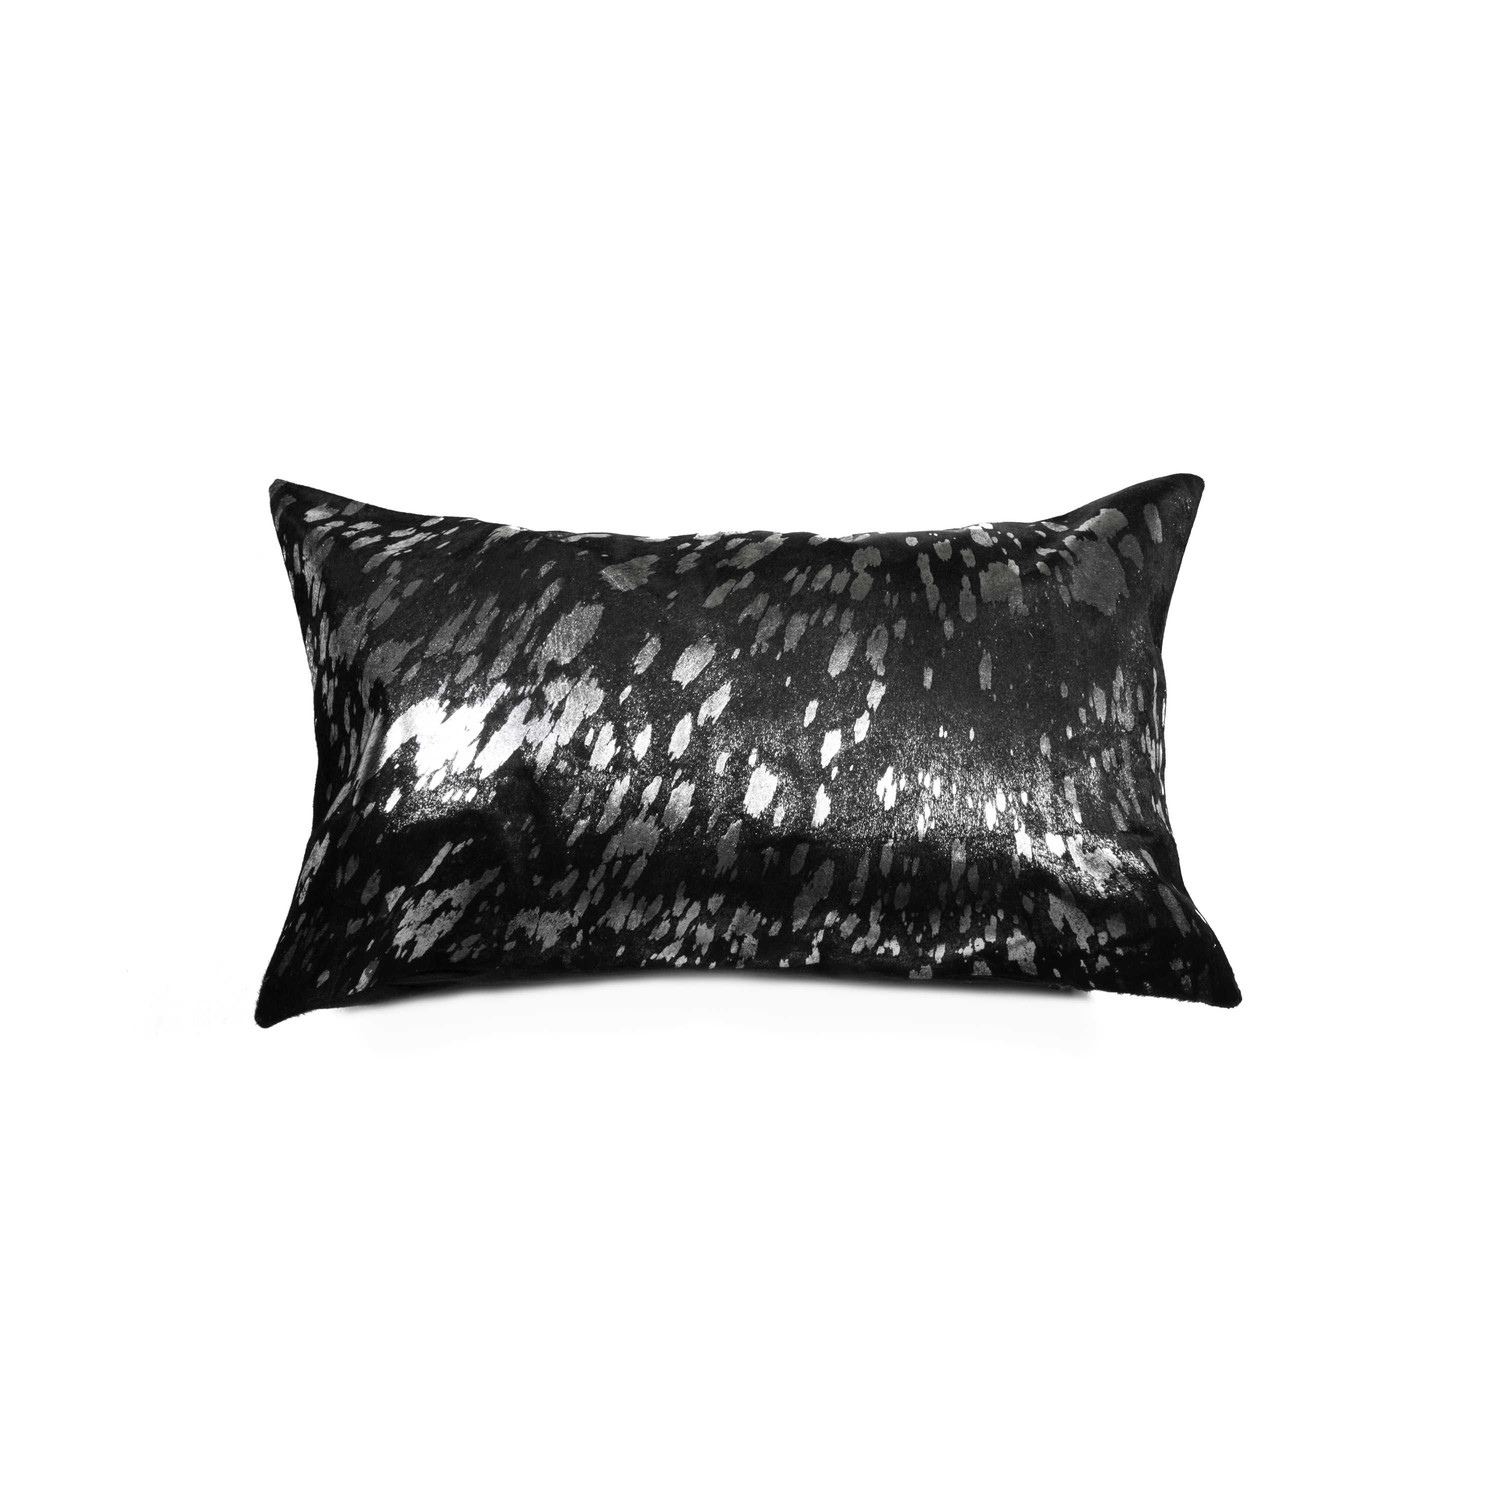 12" x 20" x 5" Modern Silver And Black Torino Kobe Cowhide - Pillow